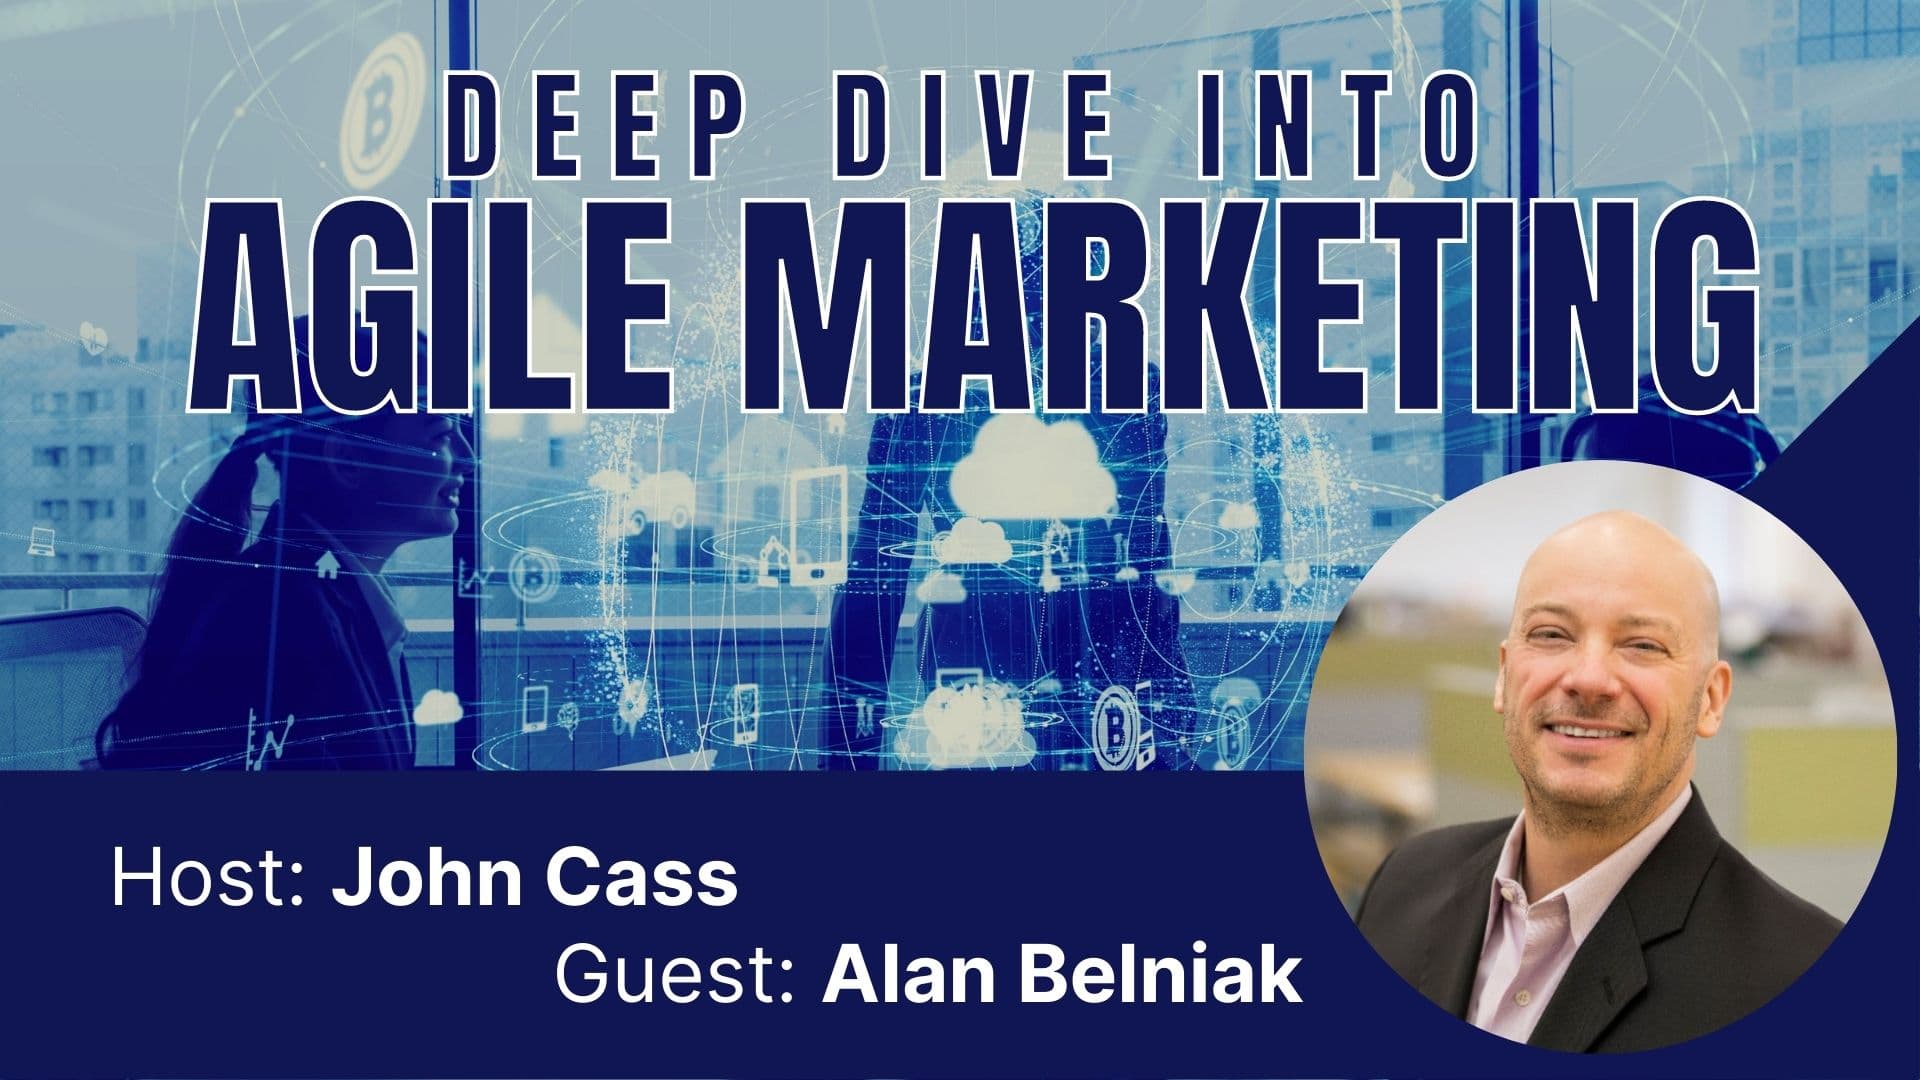 An Interview with Alan Belniak (Product Manager & Marketer)